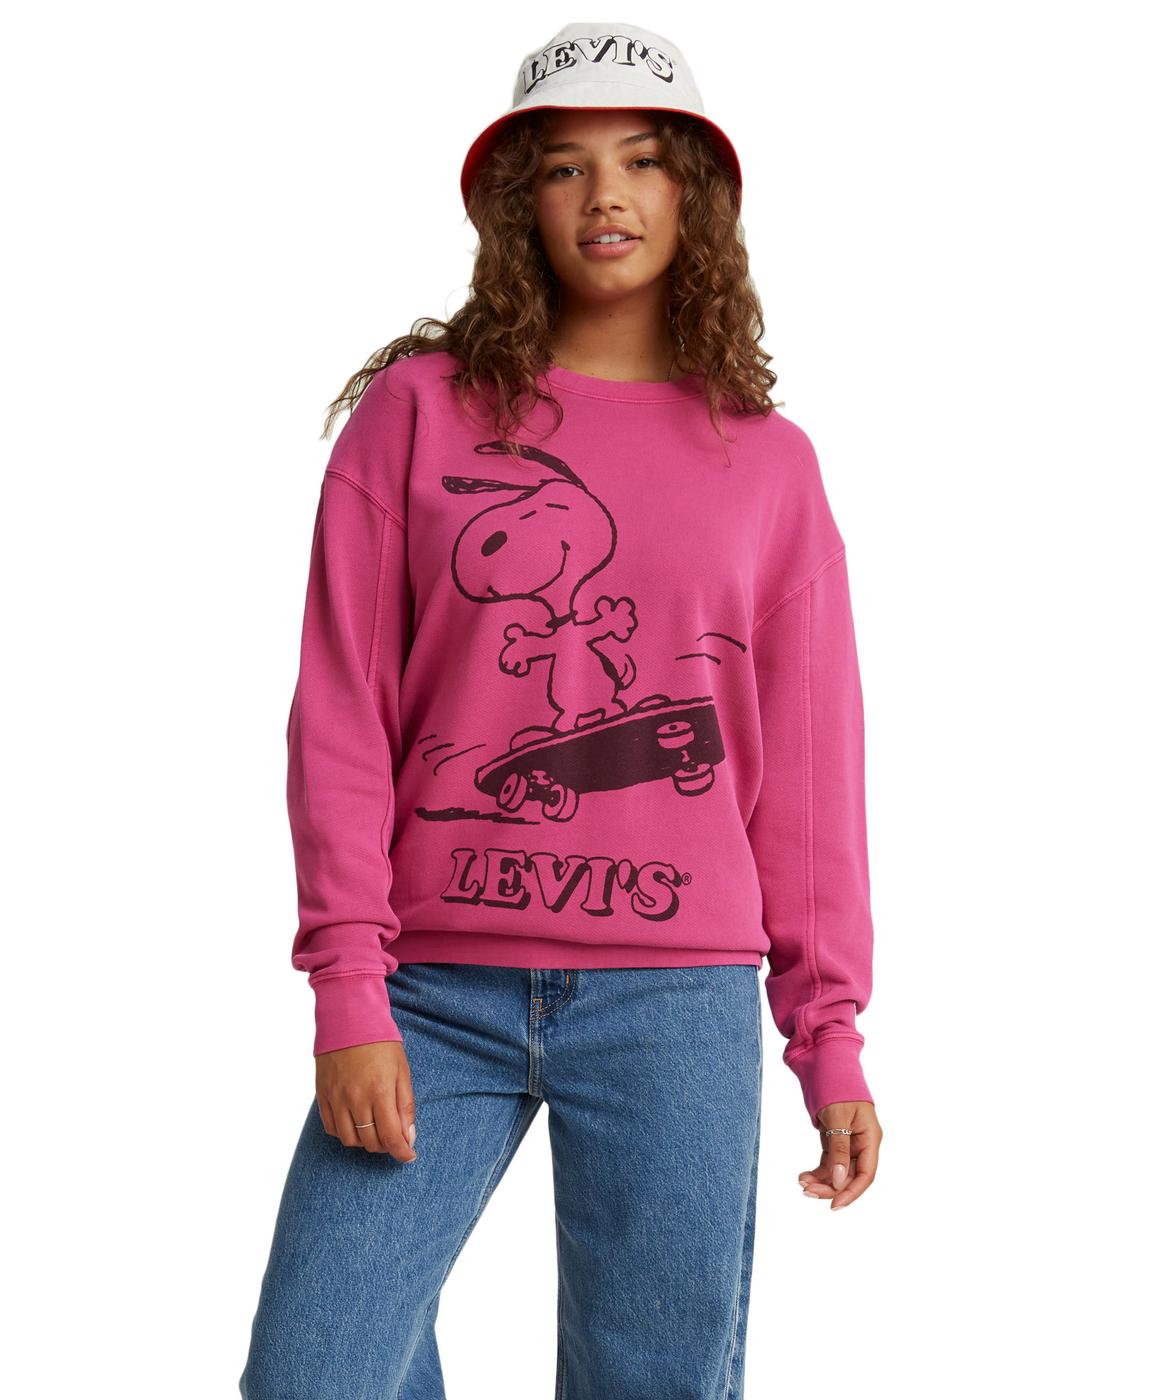 x PEANUTS Snoopy Skateboard Sweatshirt 